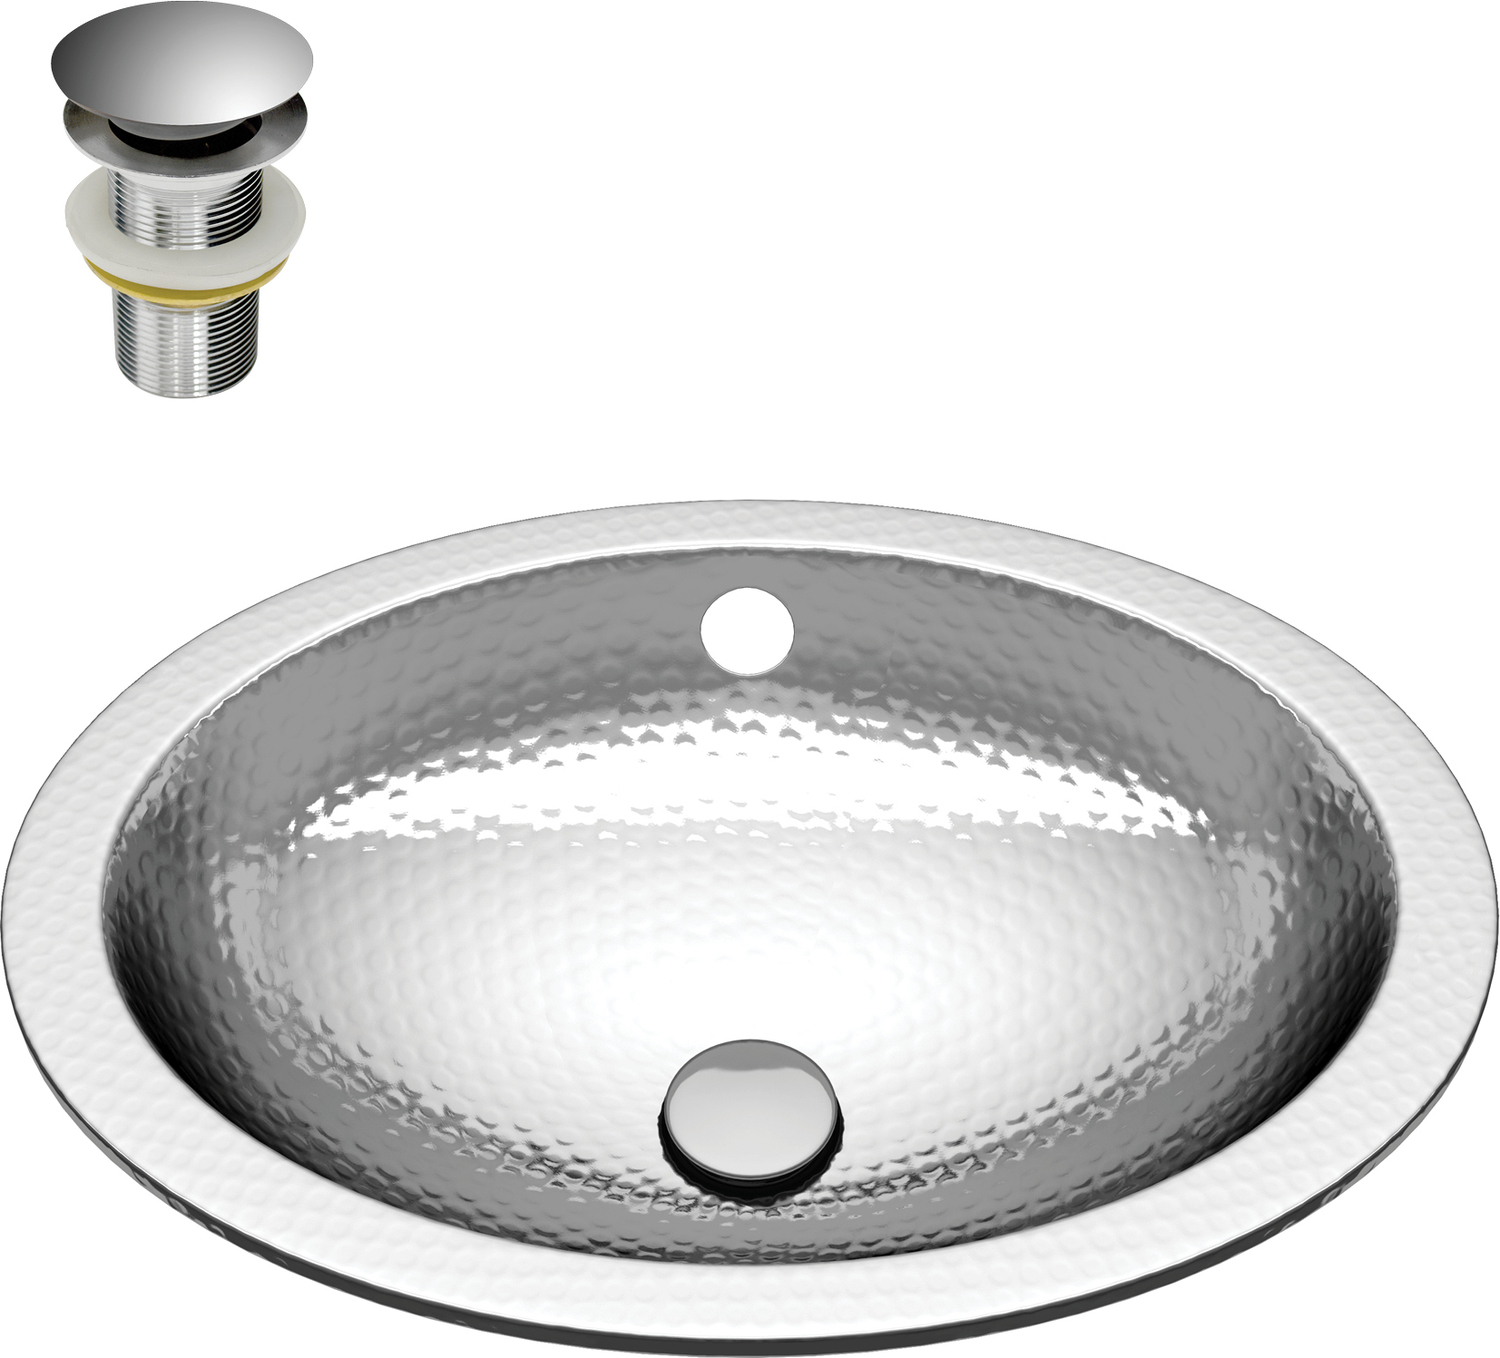 58 inch vanity Anzzi BATHROOM - Sinks - Drop-in - Stainless Steel Steel